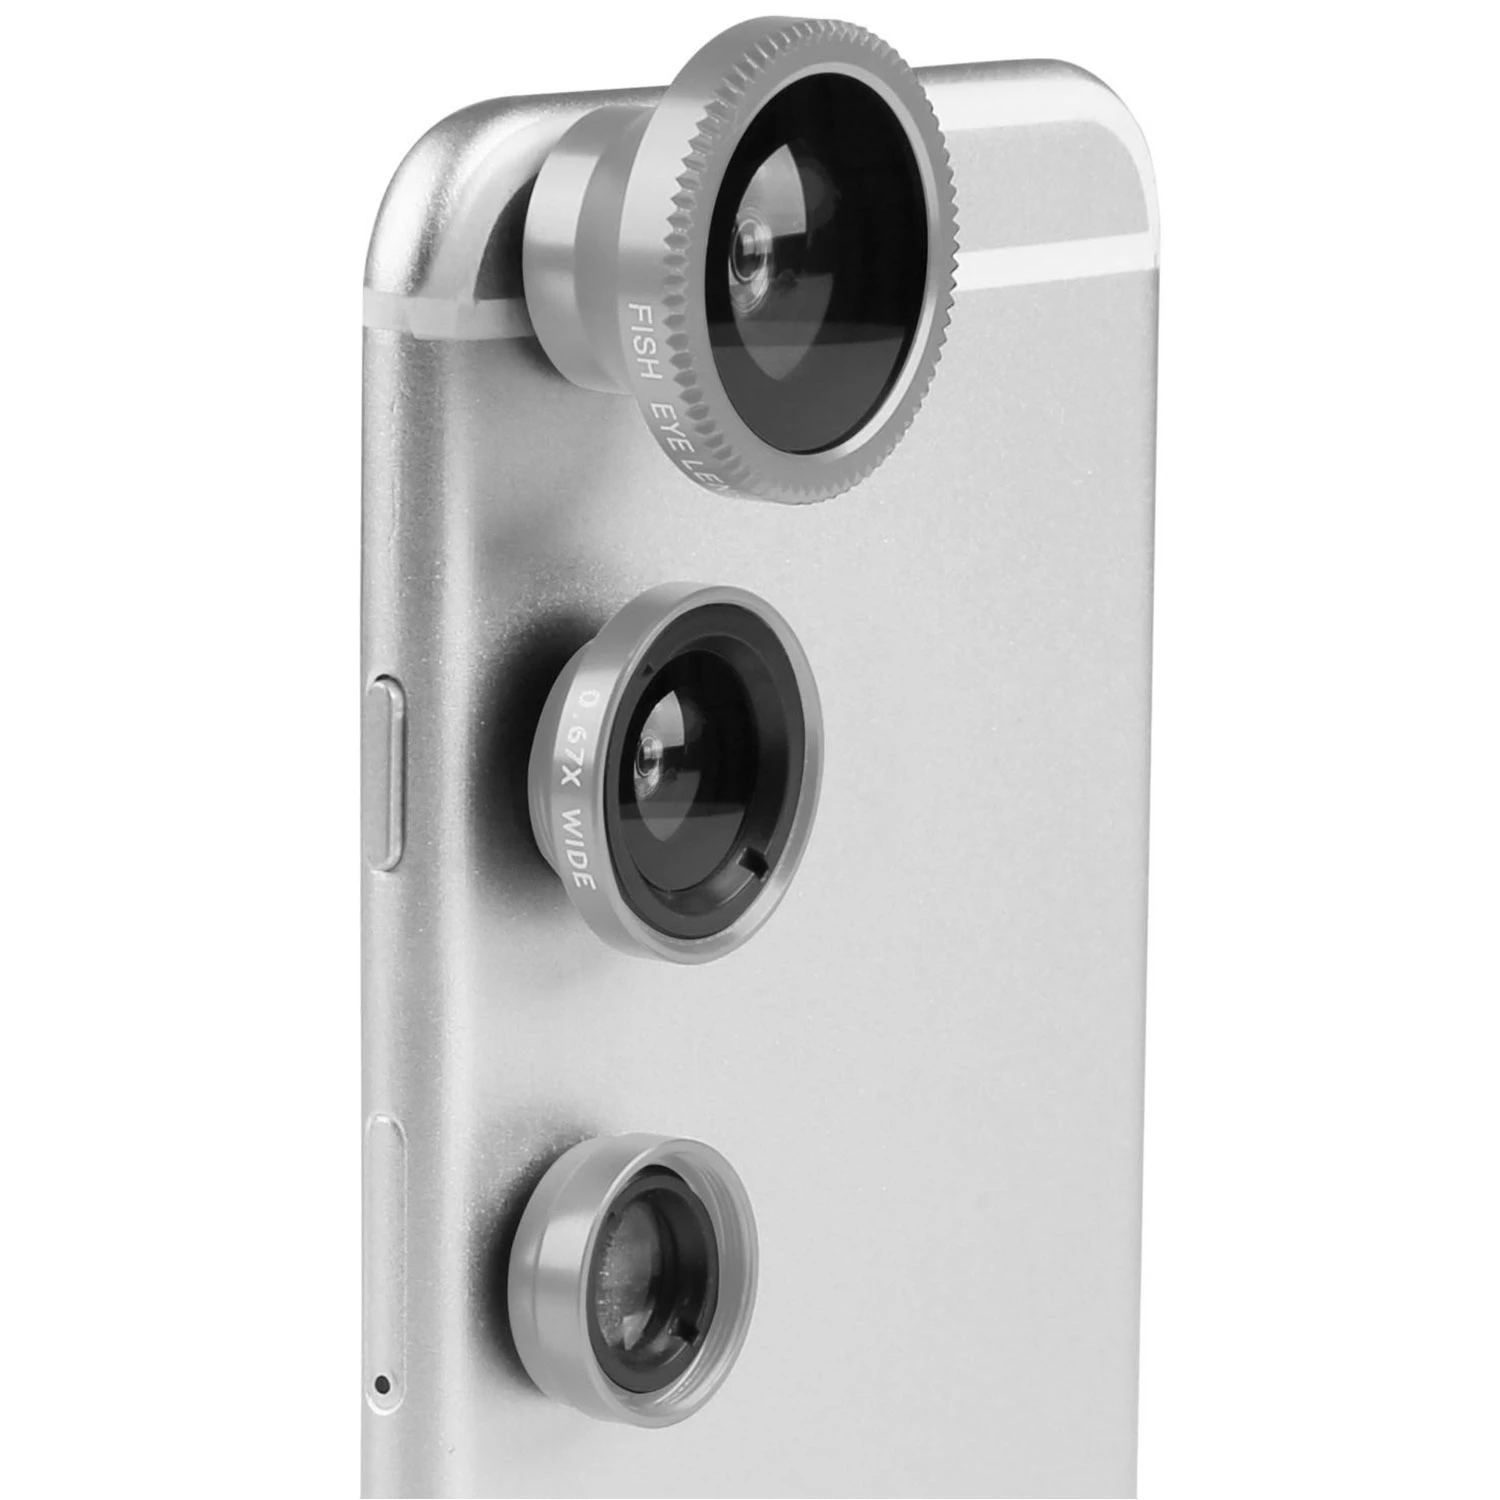 Lens Kit: 180° Fisheye, 0.67x Wide Angle, 10X Macro for iPhone X/8/7, Samsung S10/S9